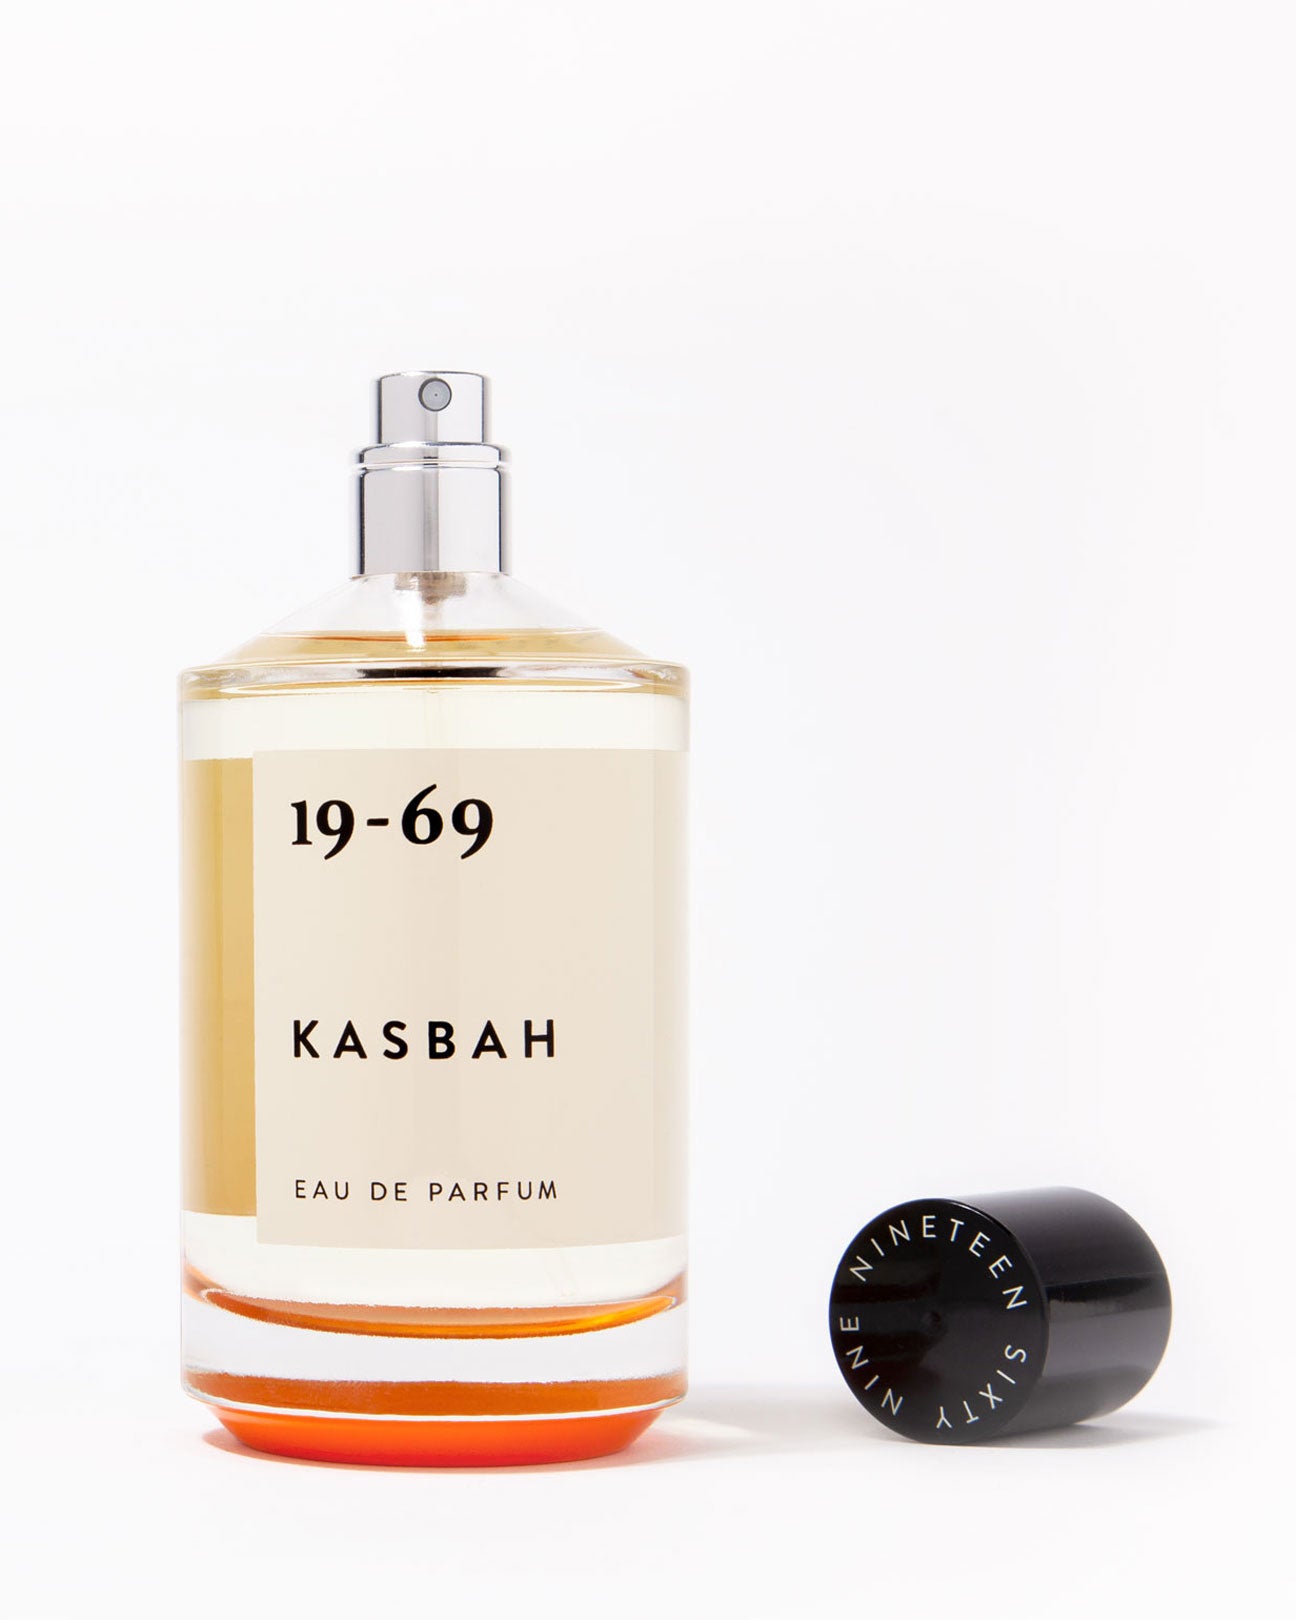 19-69 Eau De Parfum 30ml. in Kasbah